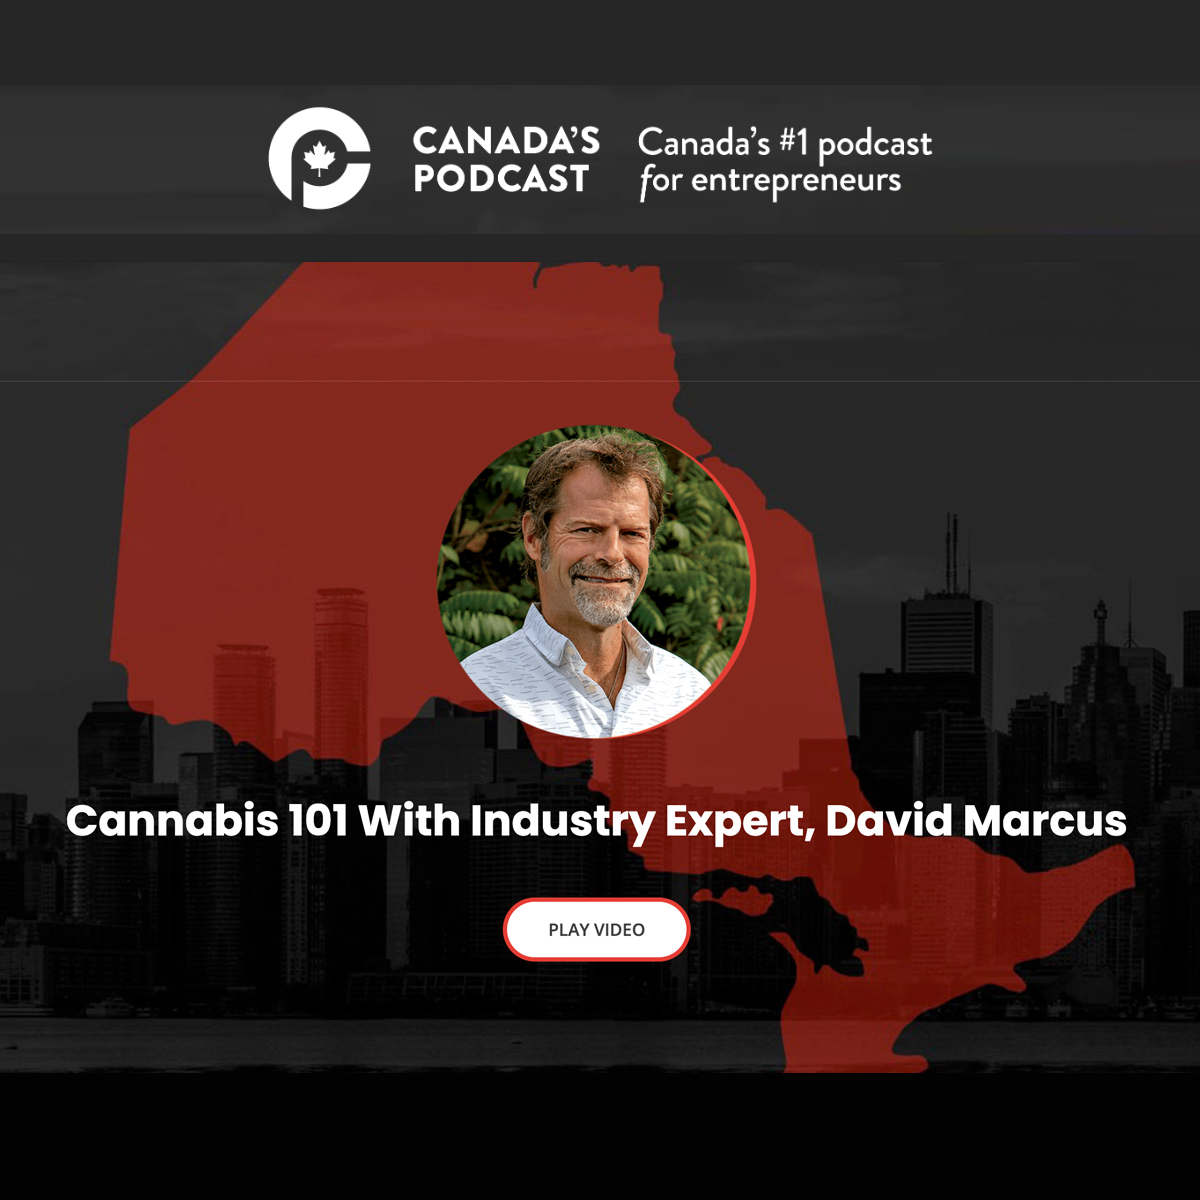 WholeHemp - Videos - Canada's Podcast: Cannabis 101 with Industry Expert David Marcus